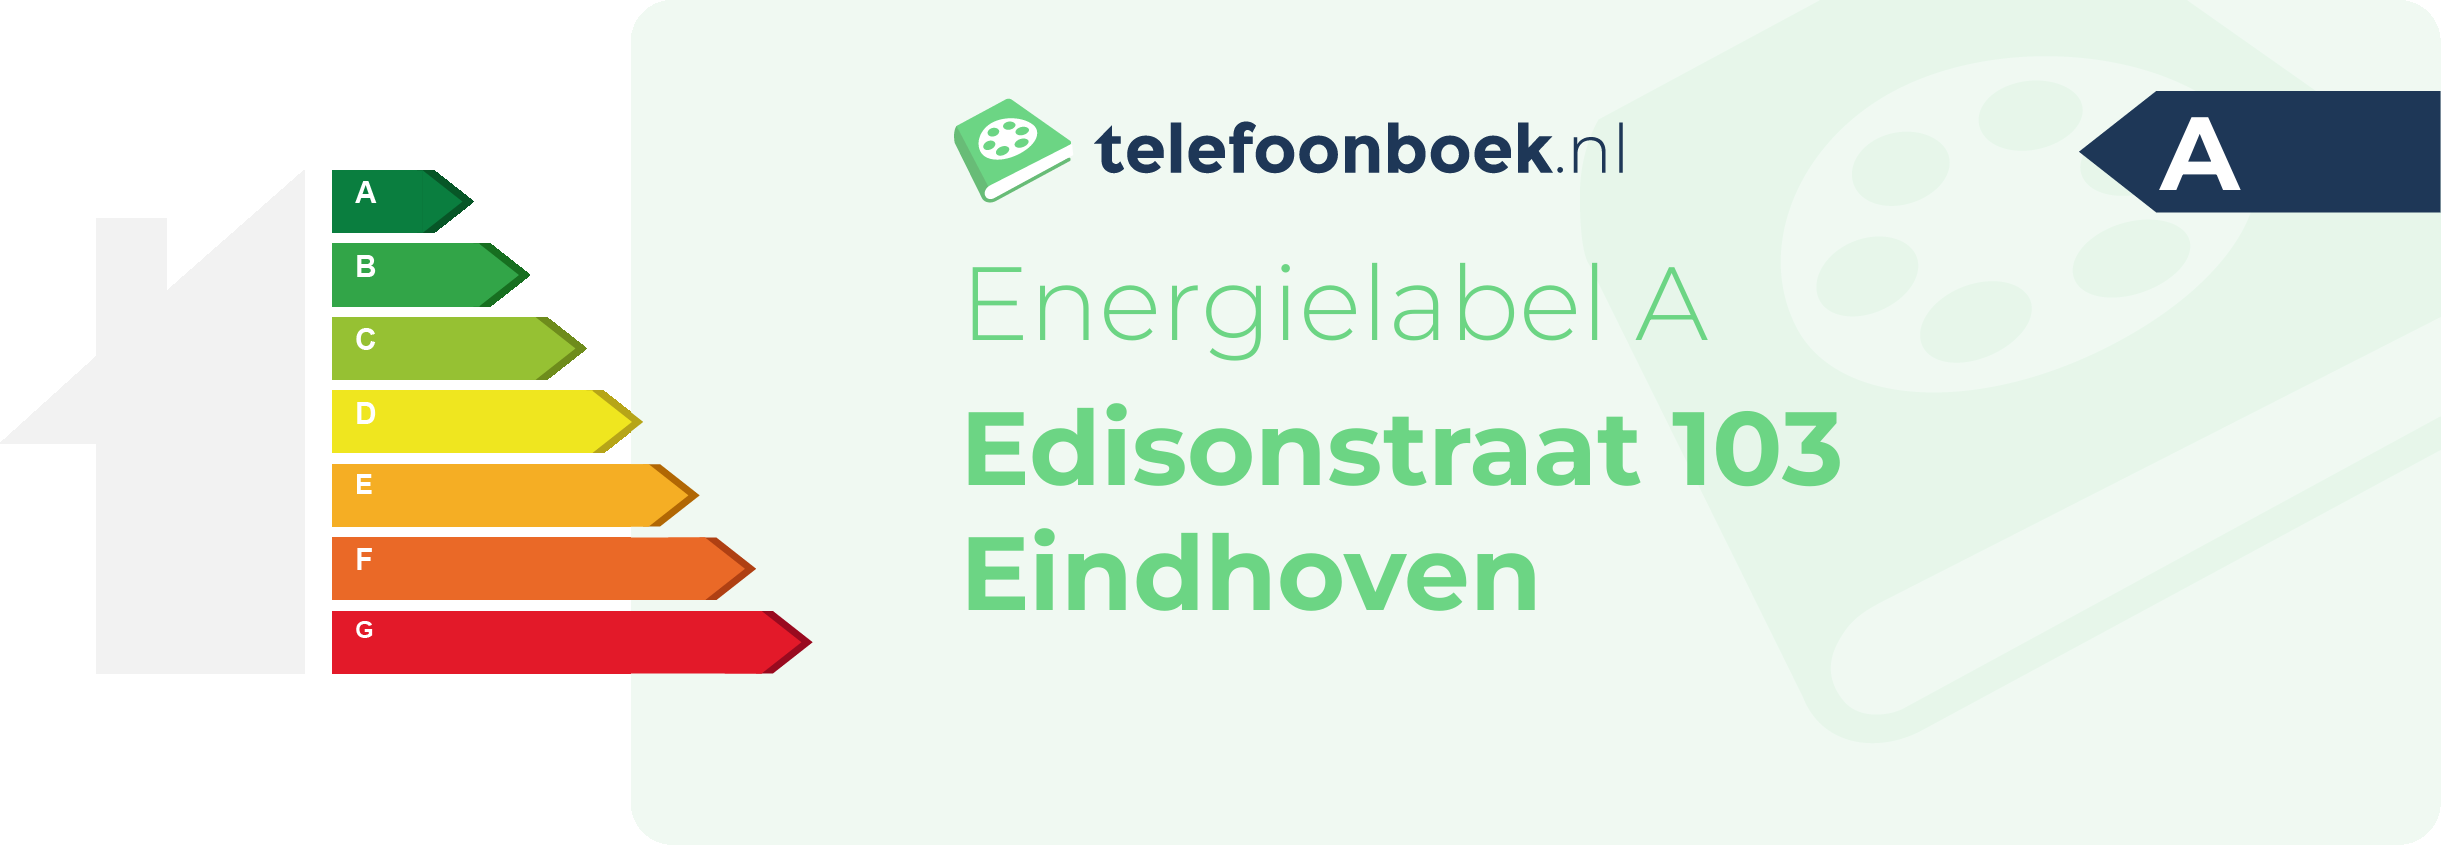 Energielabel Edisonstraat 103 Eindhoven